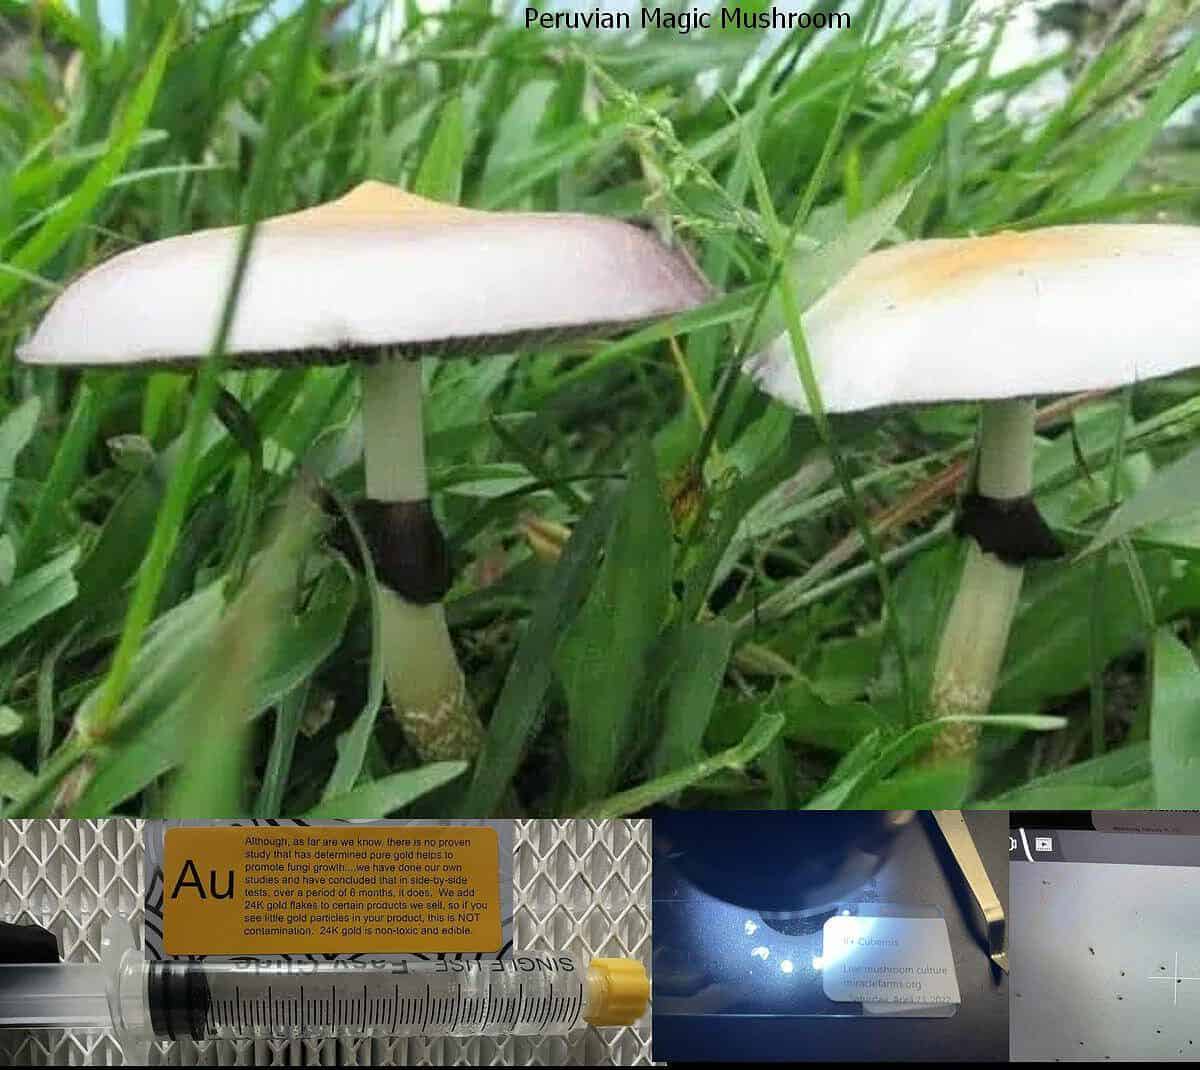 Peruvian Magic Mushroom spore syringe